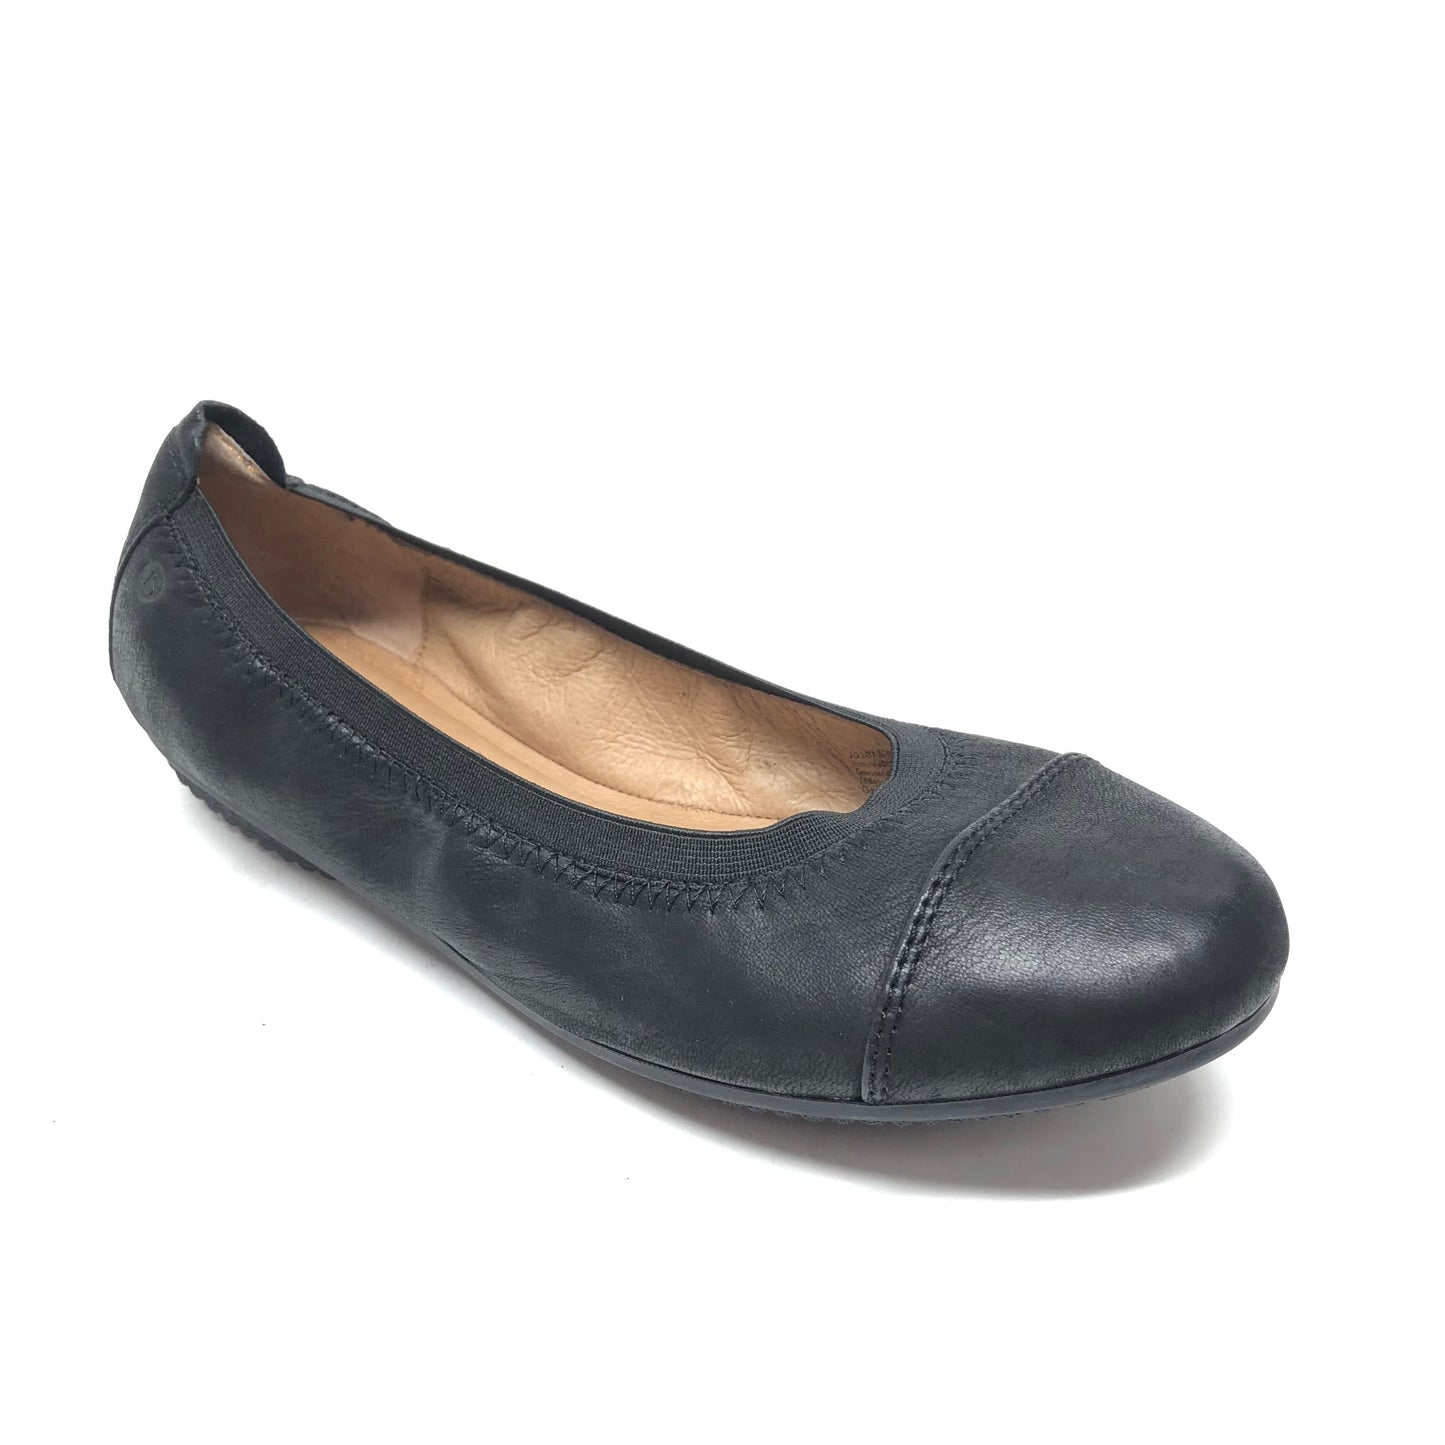 Black Shoes Flats Josef Seibel, Size 7.5